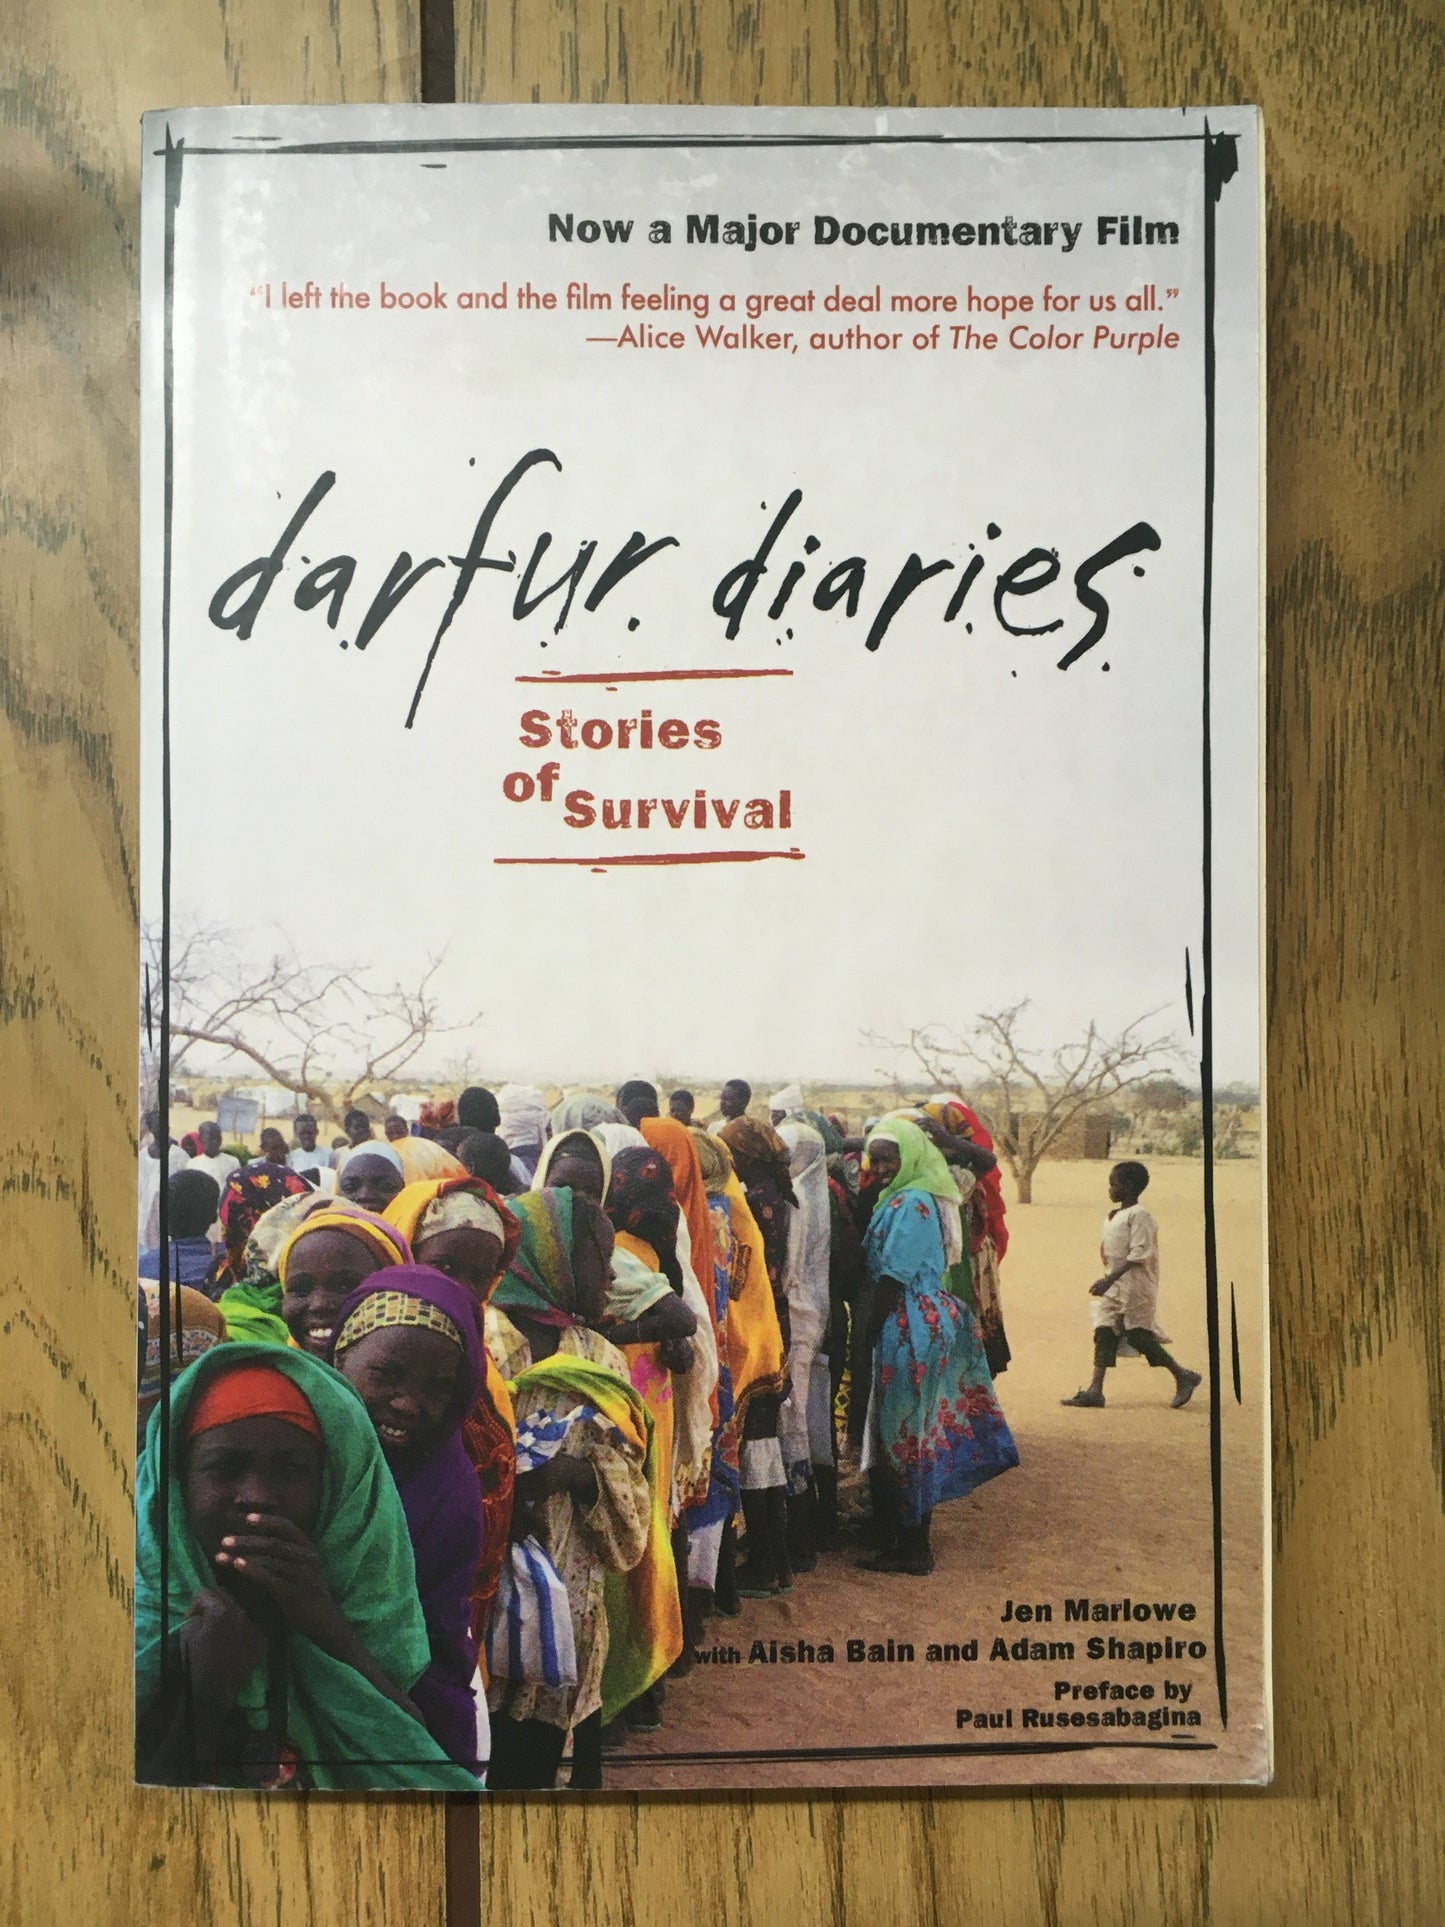 Darfur Diaries: Stories of Survivial